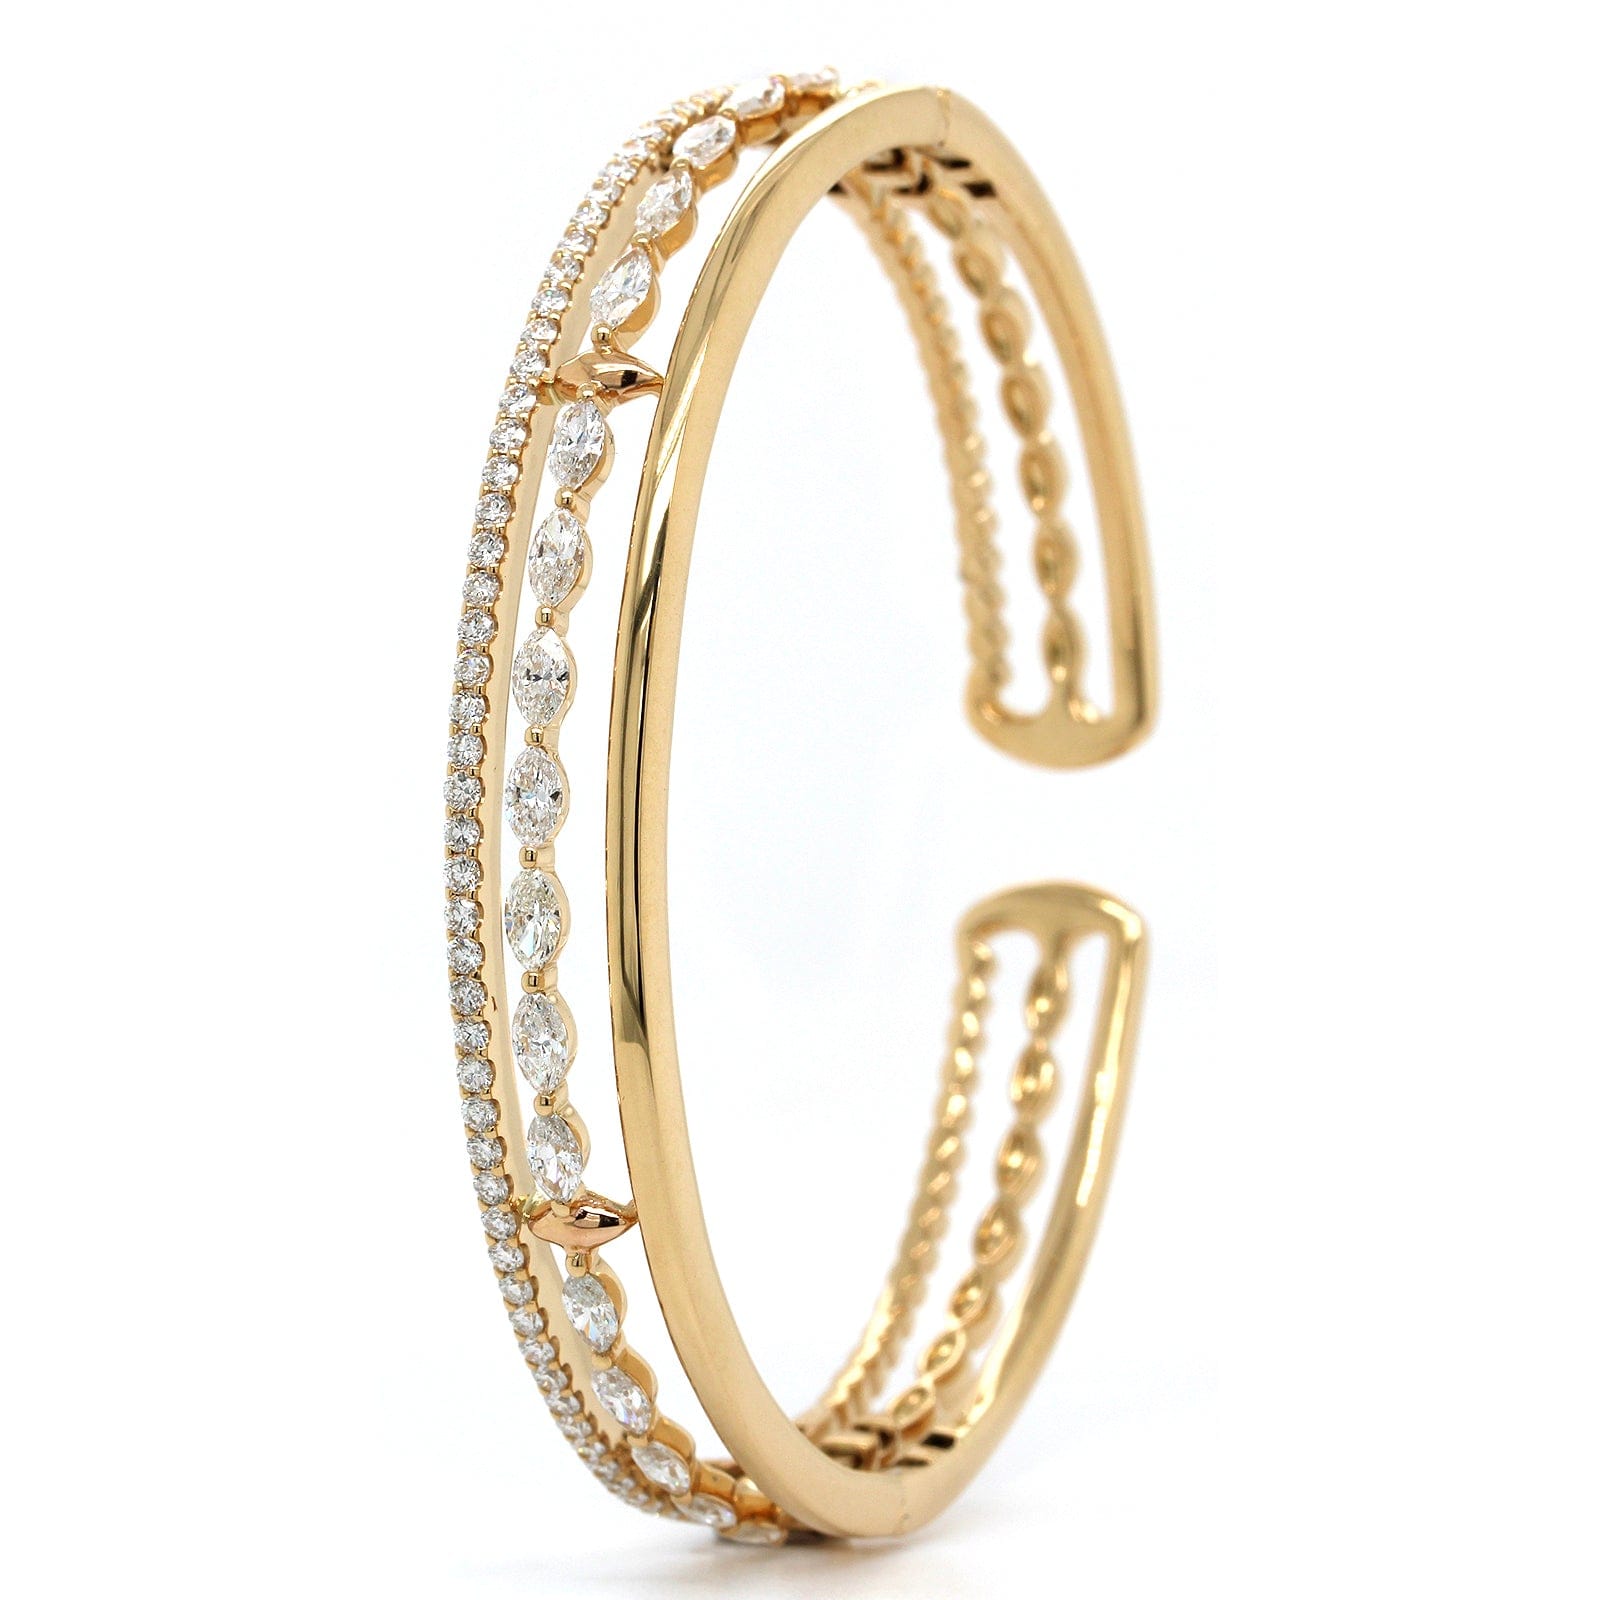 Etho Maria 18K Yellow Gold Marquise Diamond Cuff Bracelet